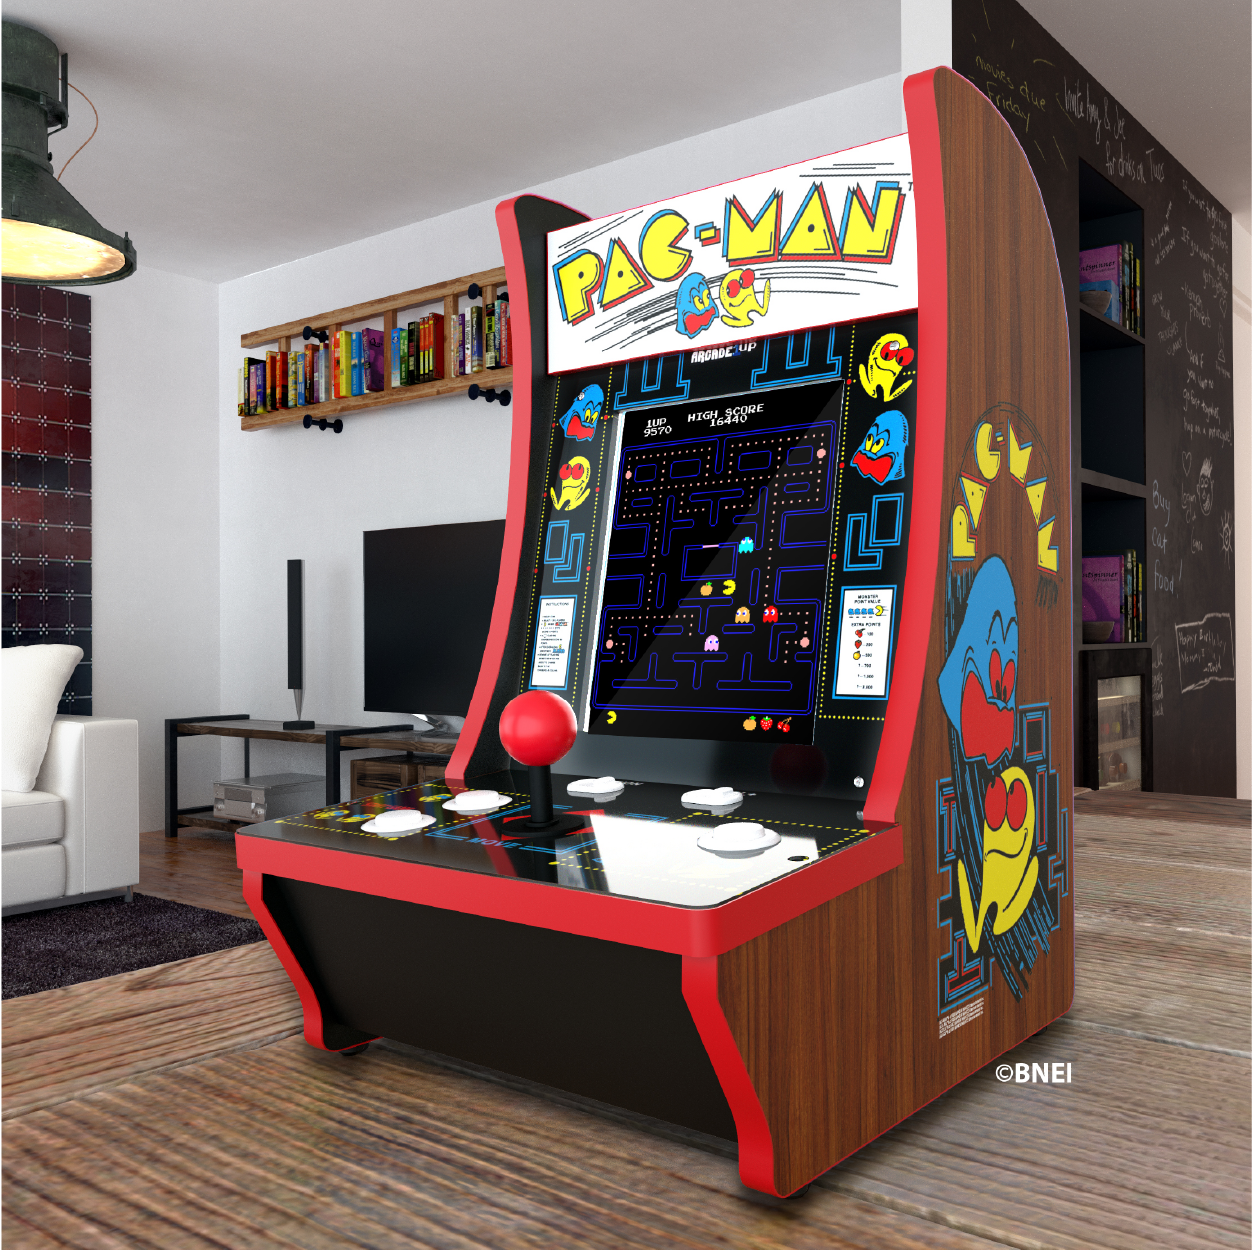 Pac-man Mini arcade machine